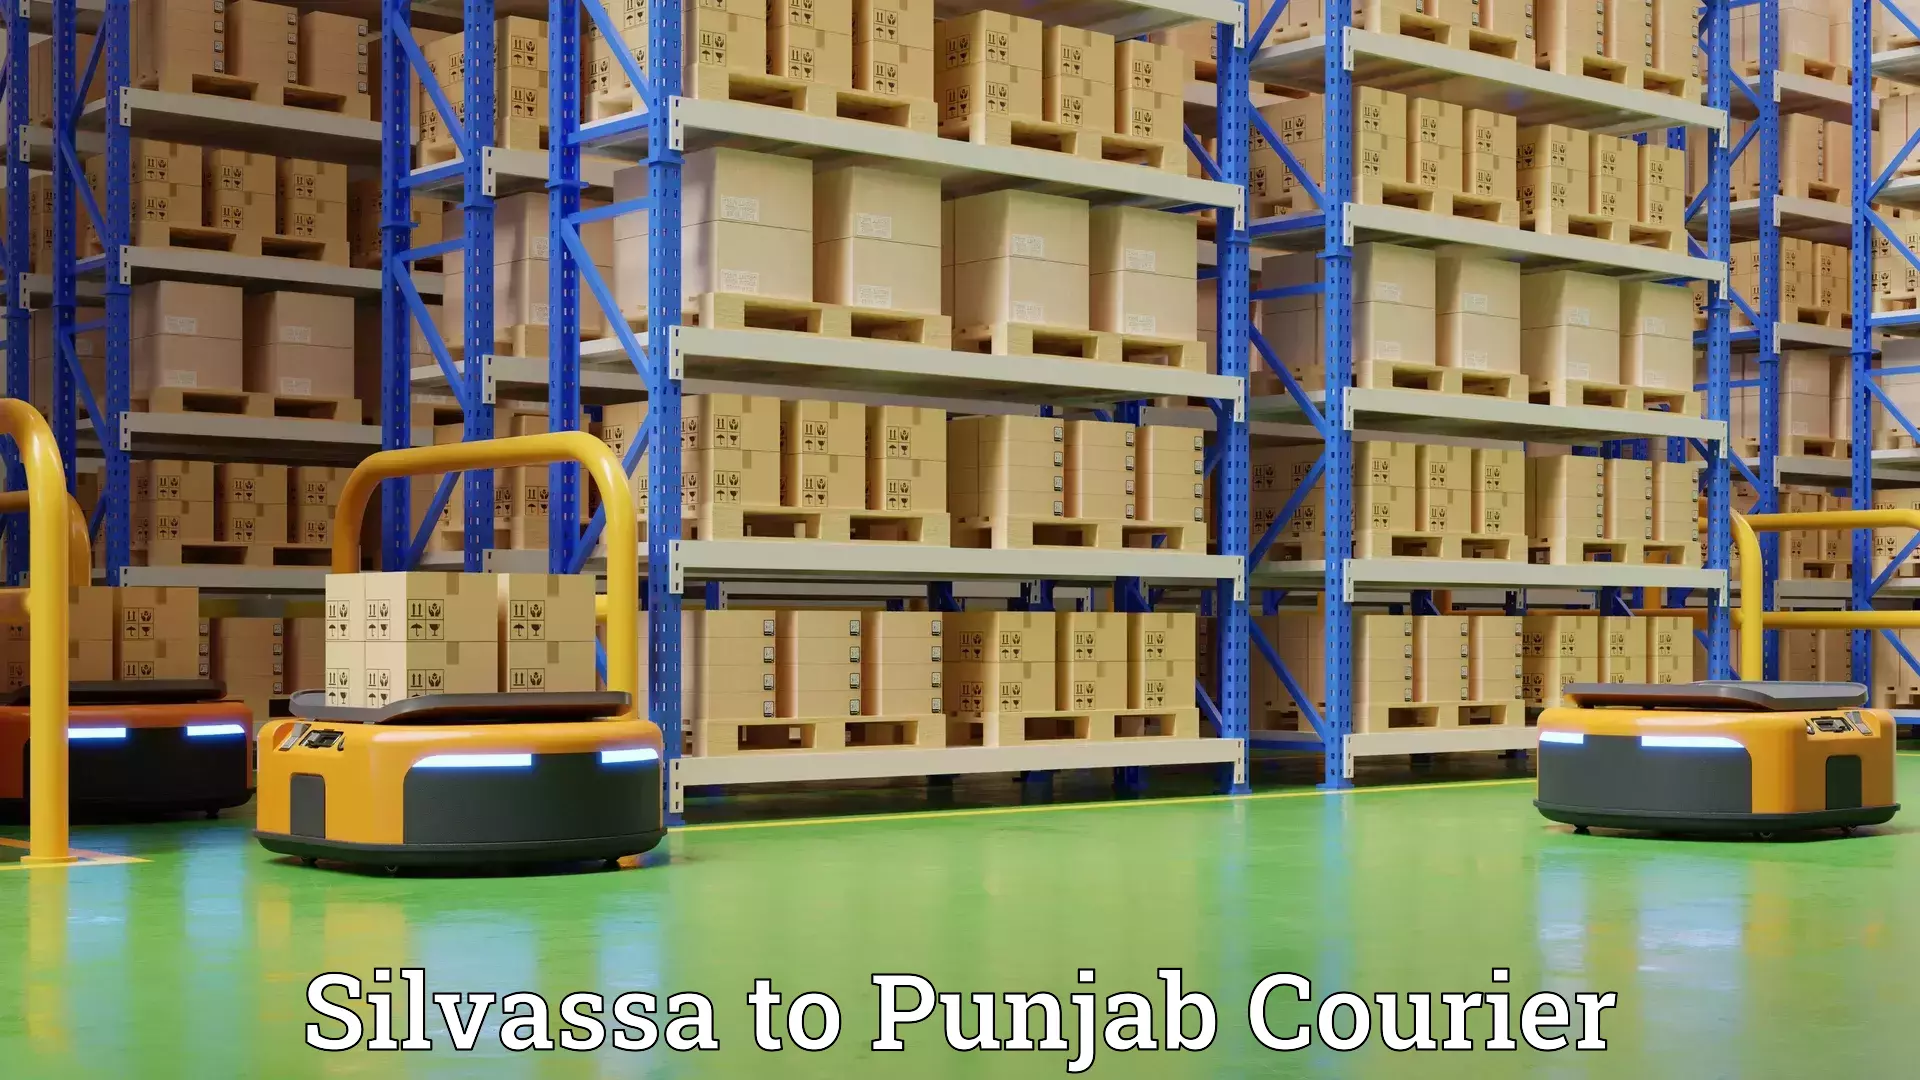 Moving and storage services Silvassa to Punjab